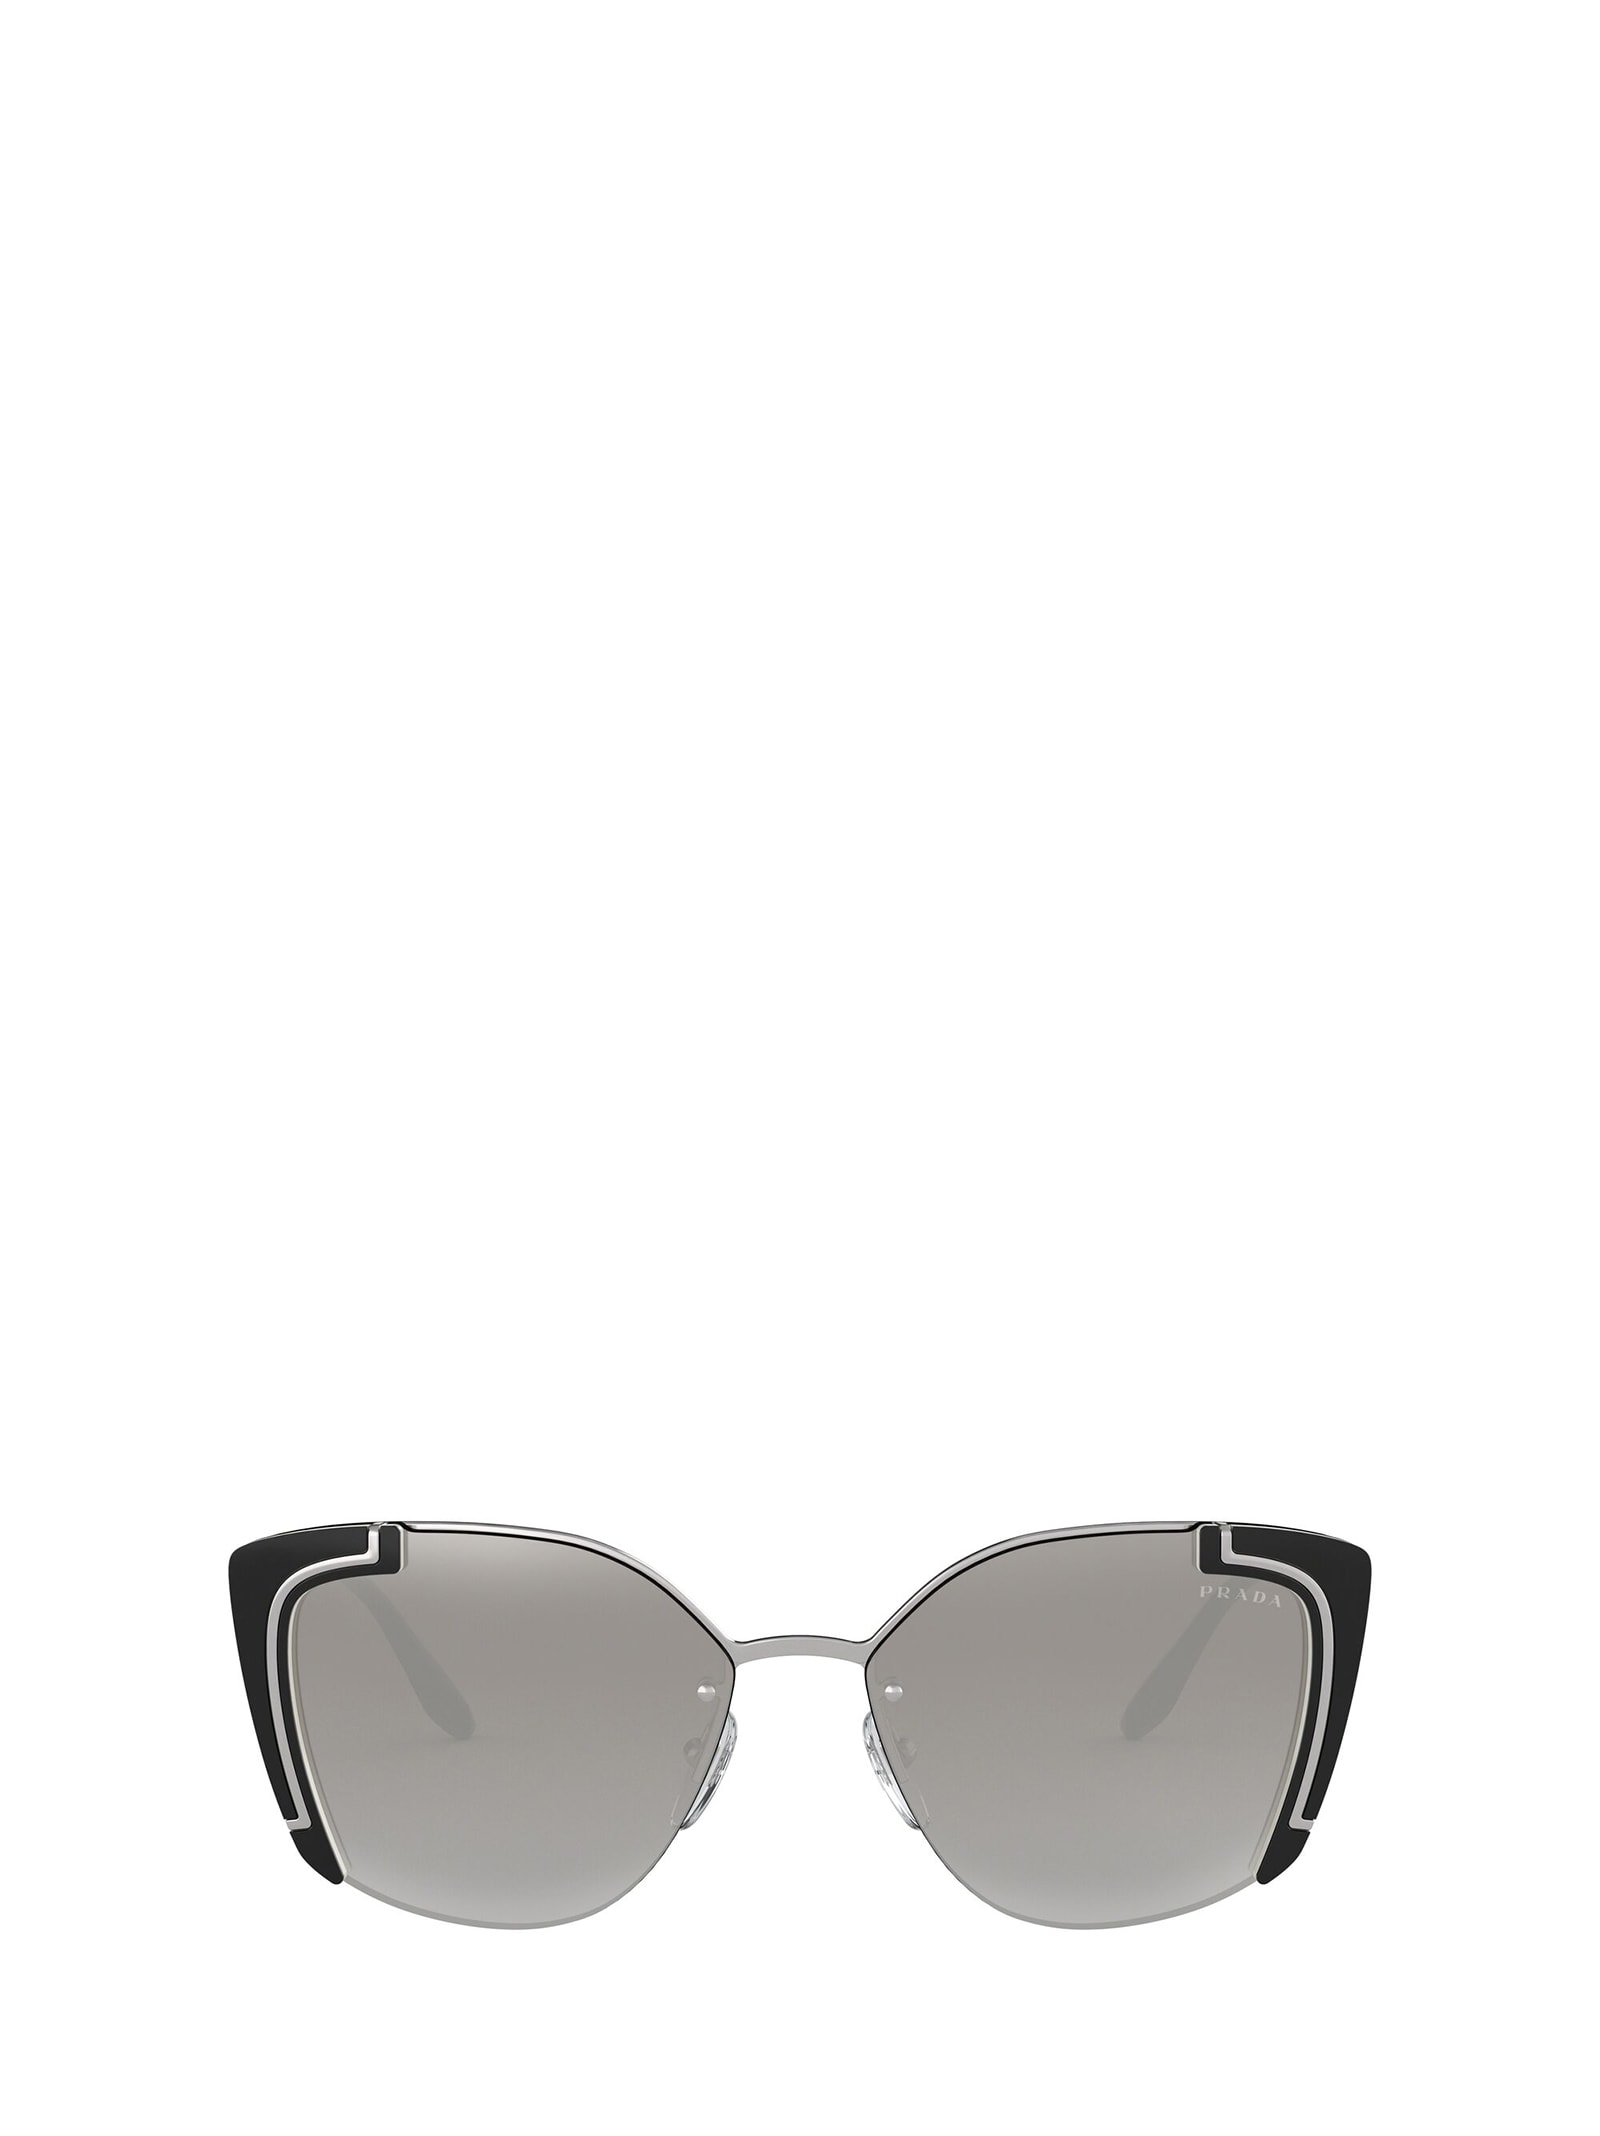 Prada Prada Pr 59vs Silver / Black Ivory Sunglasses